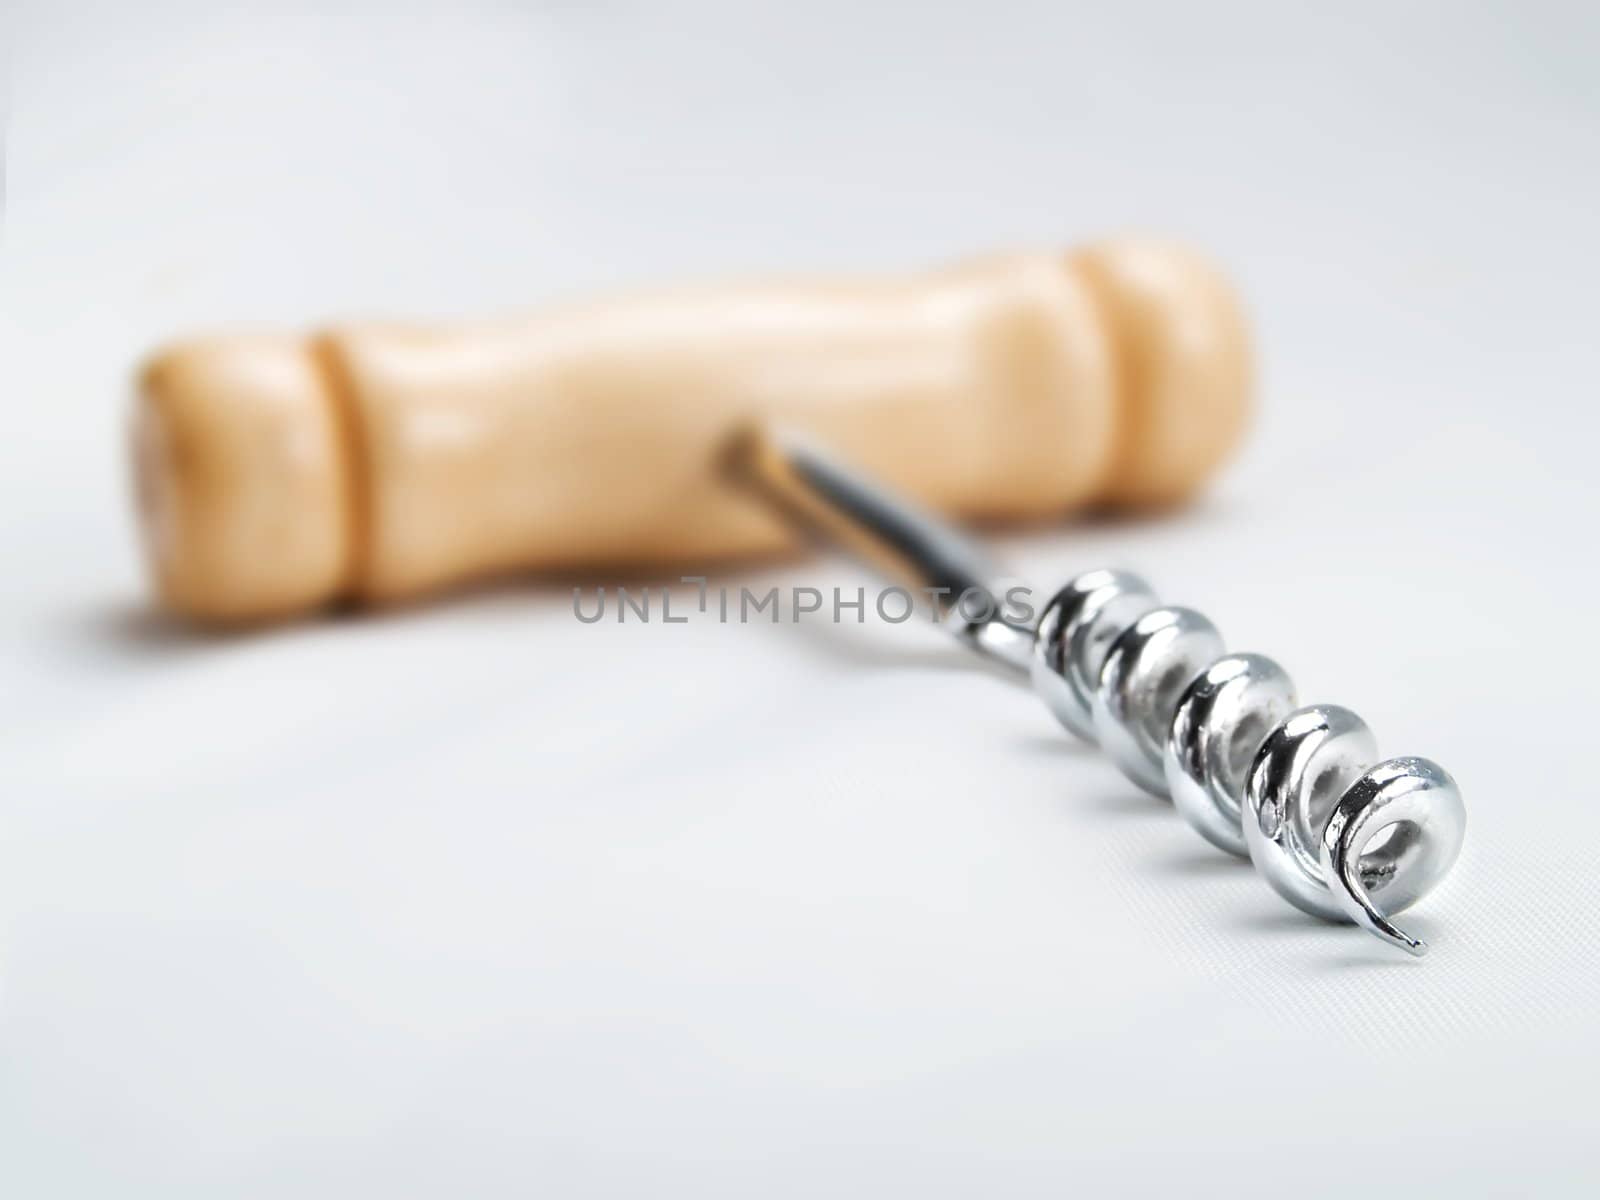 Wine corkscrew on a white background